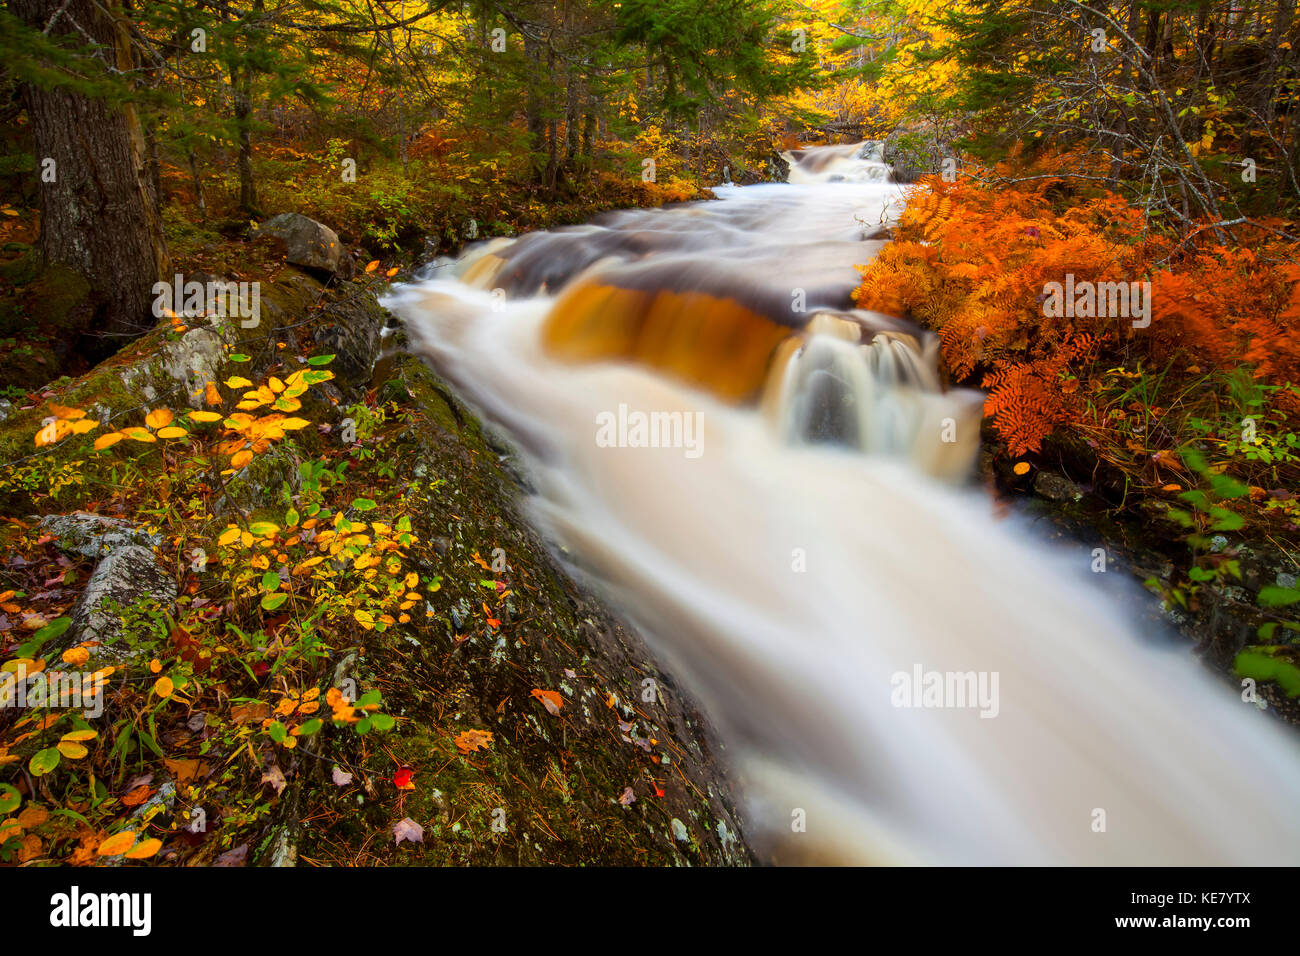 Vibrantes colores de otoño follaje por Kings arroyo con cascadas de agua fluida y desenfoque, cerca de Sleepy Cove; Gran Lago, Nova Scotia, Canadá Foto de stock